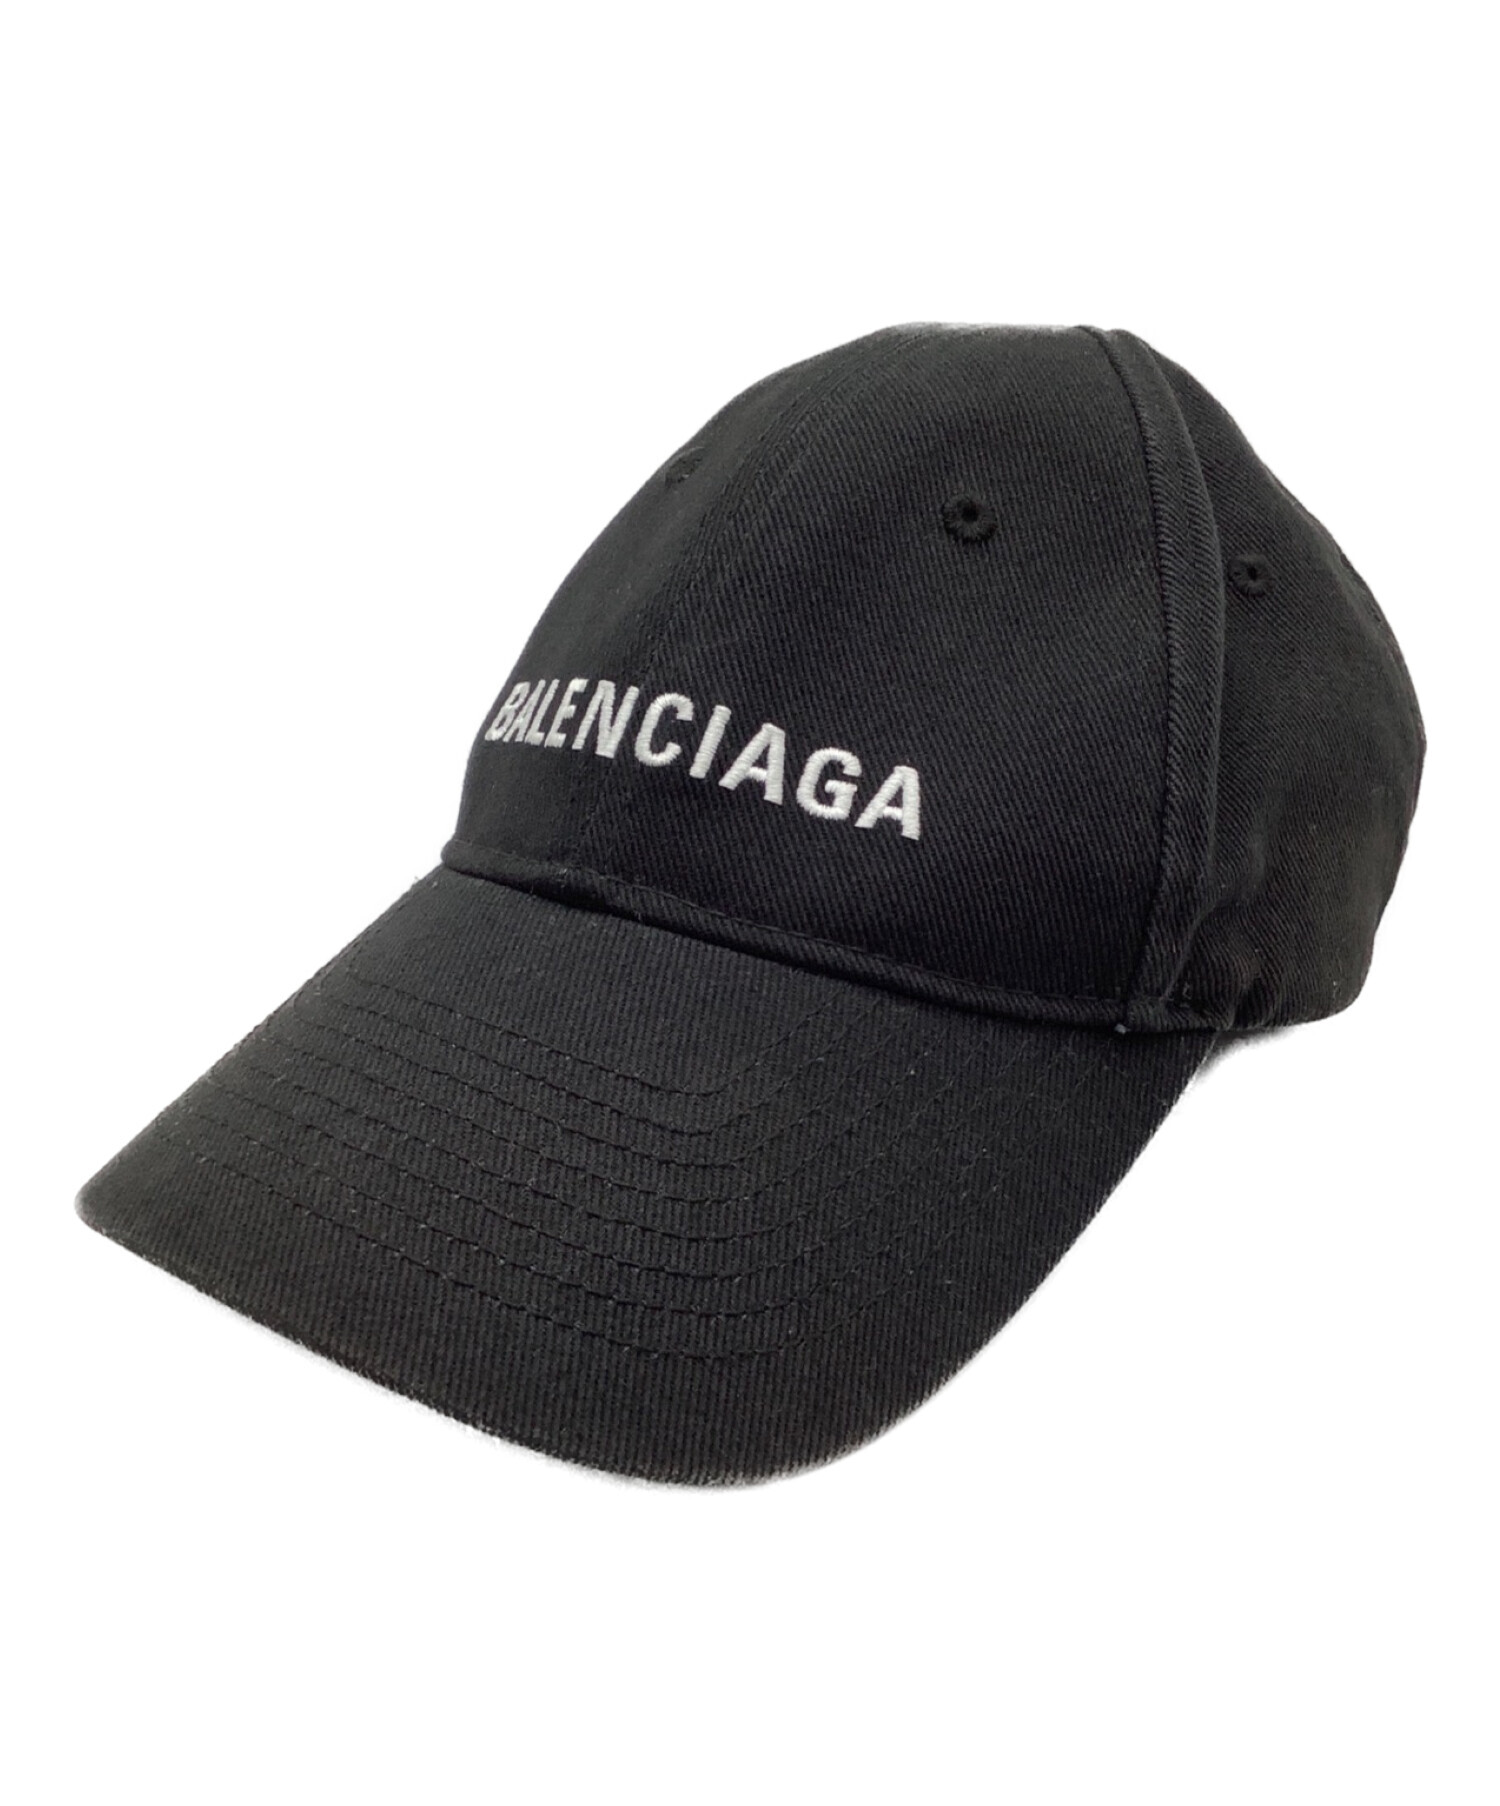 BALENCIAGA (バレンシアガ) キャップ ブラック サイズ:L 58cm